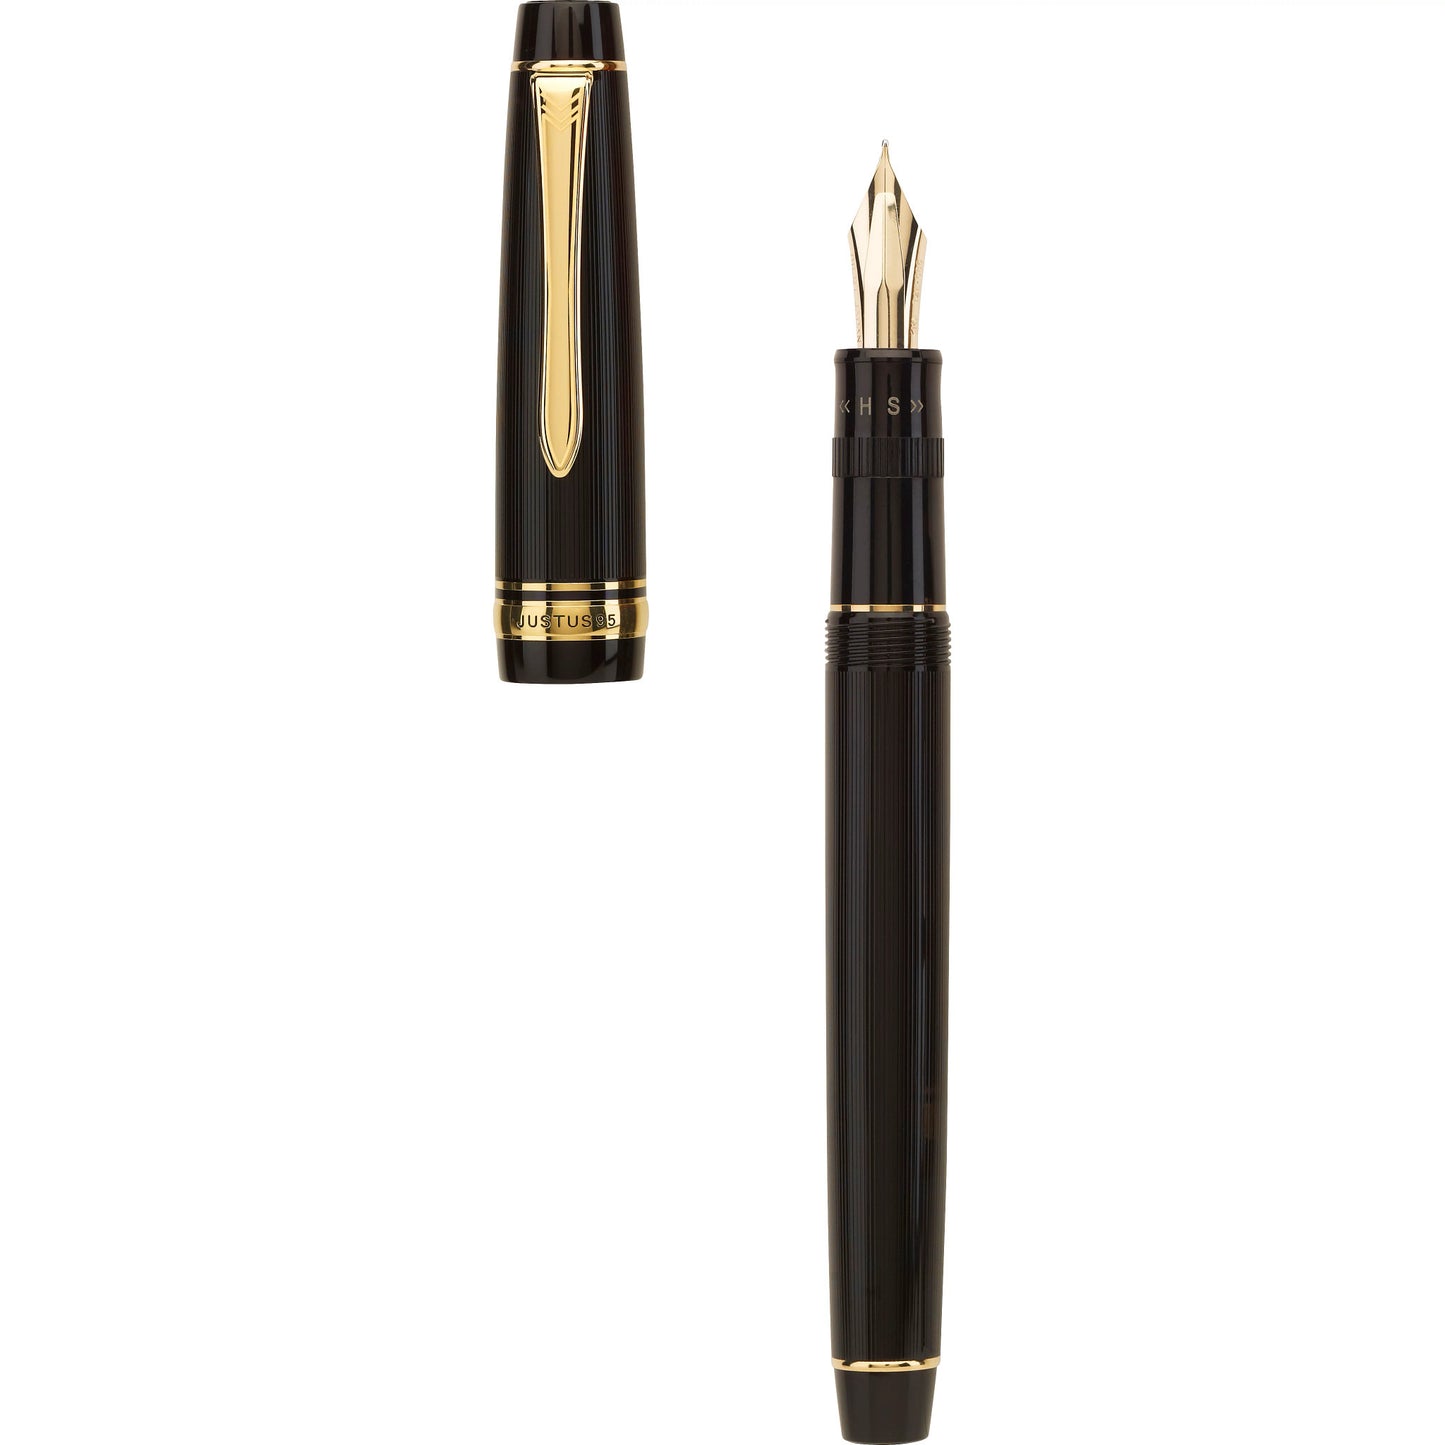 Pilot Justus 95 Fountain Pen - Black with Gold Trim